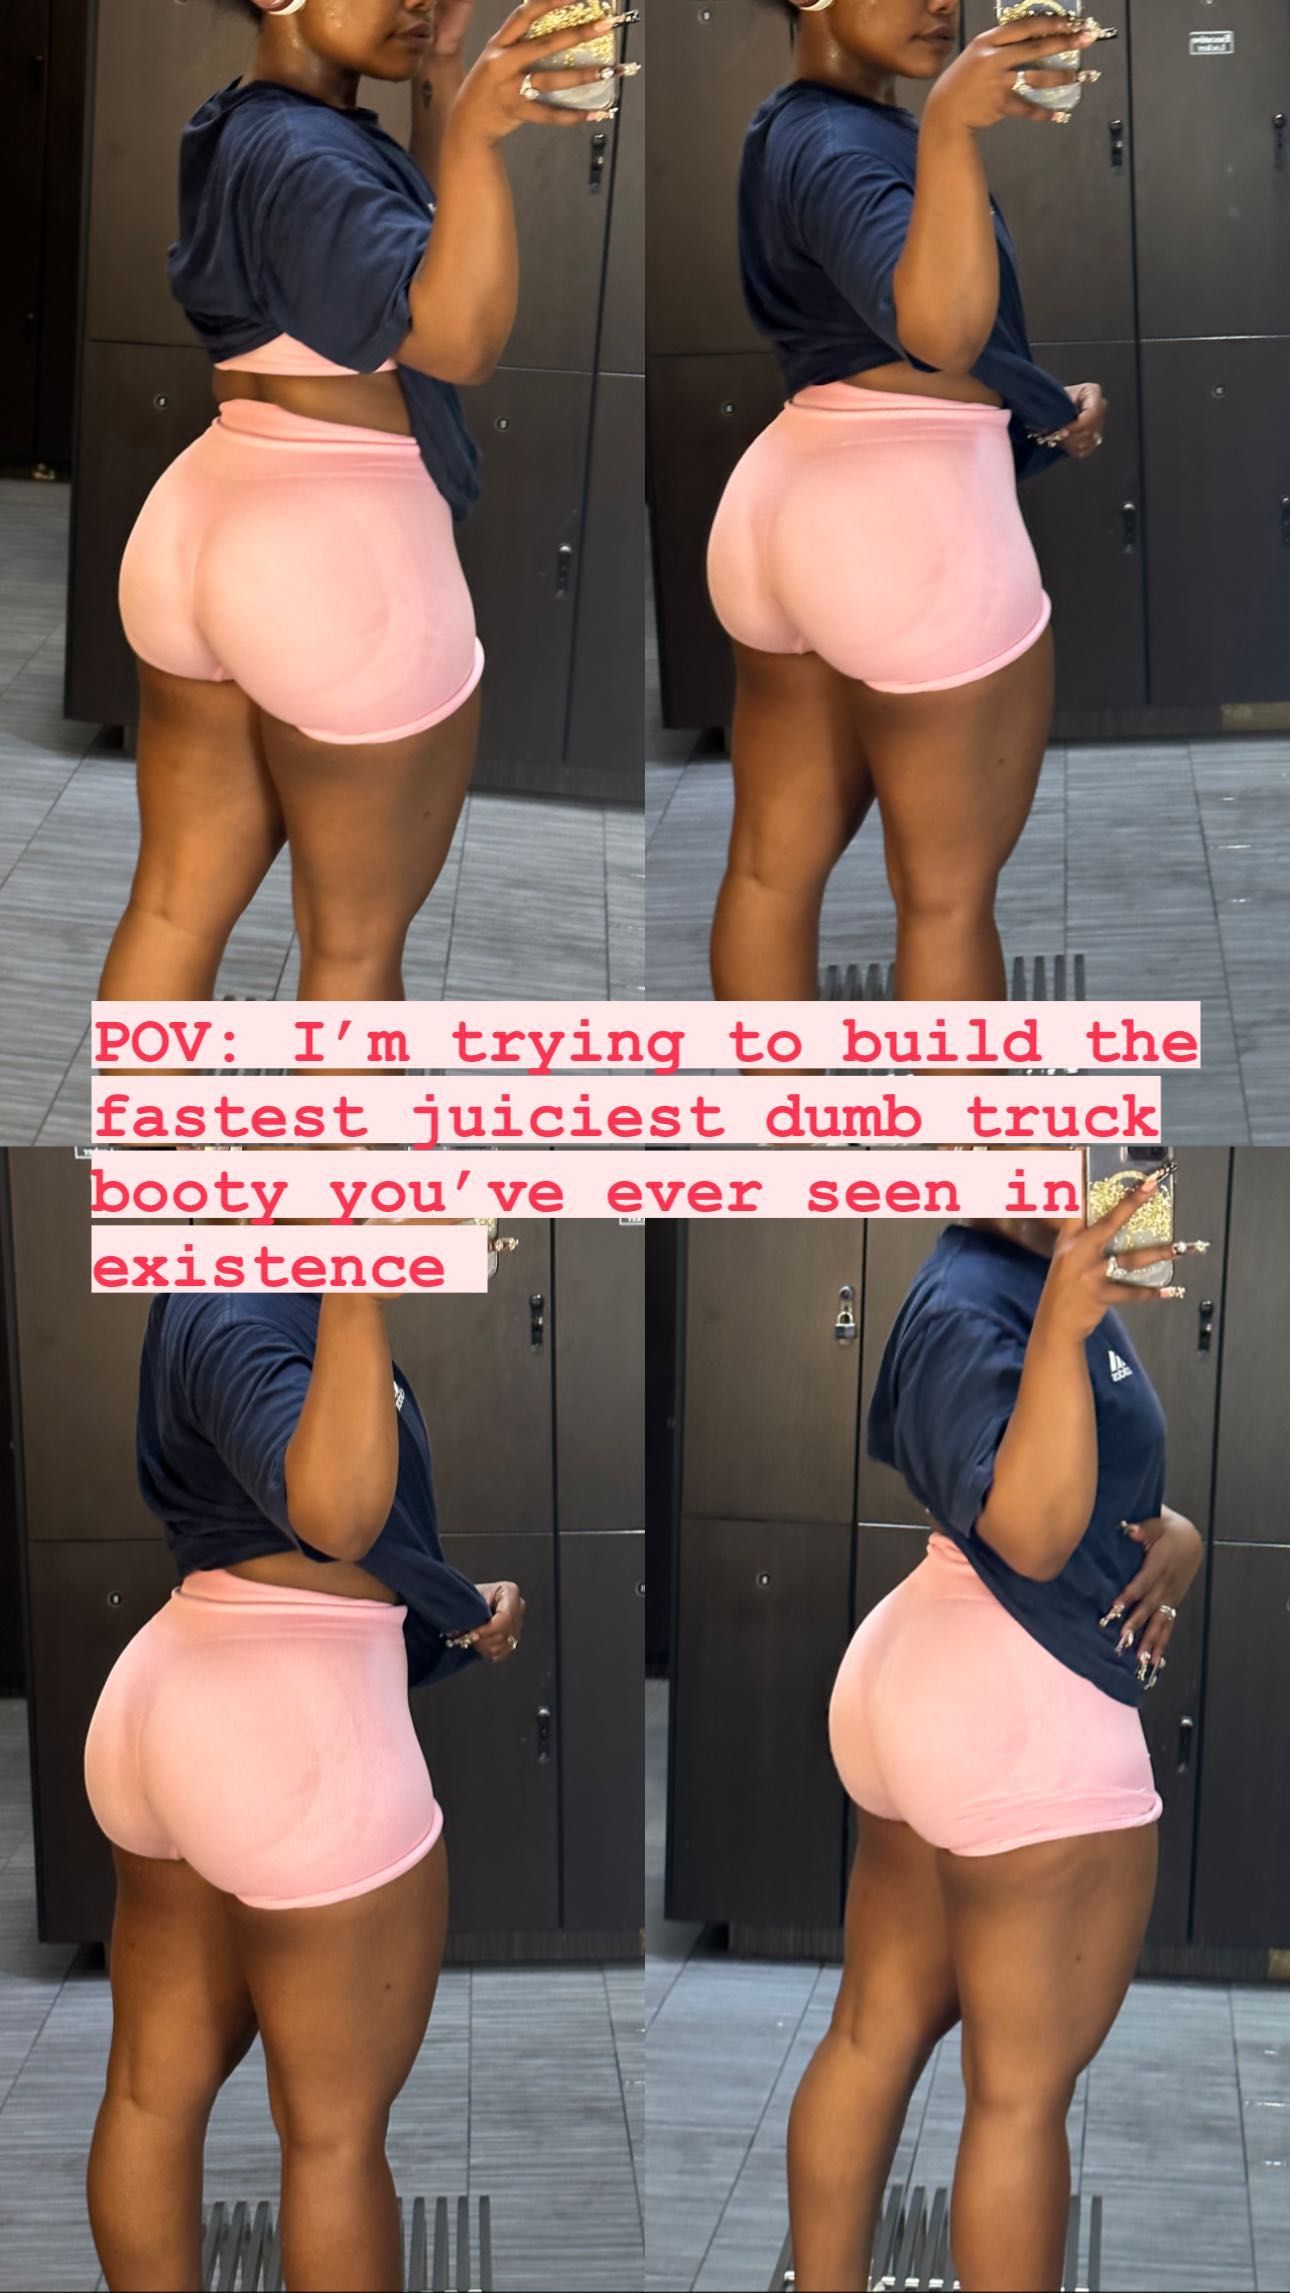 alex phiri recommends big nice juicy ass pic